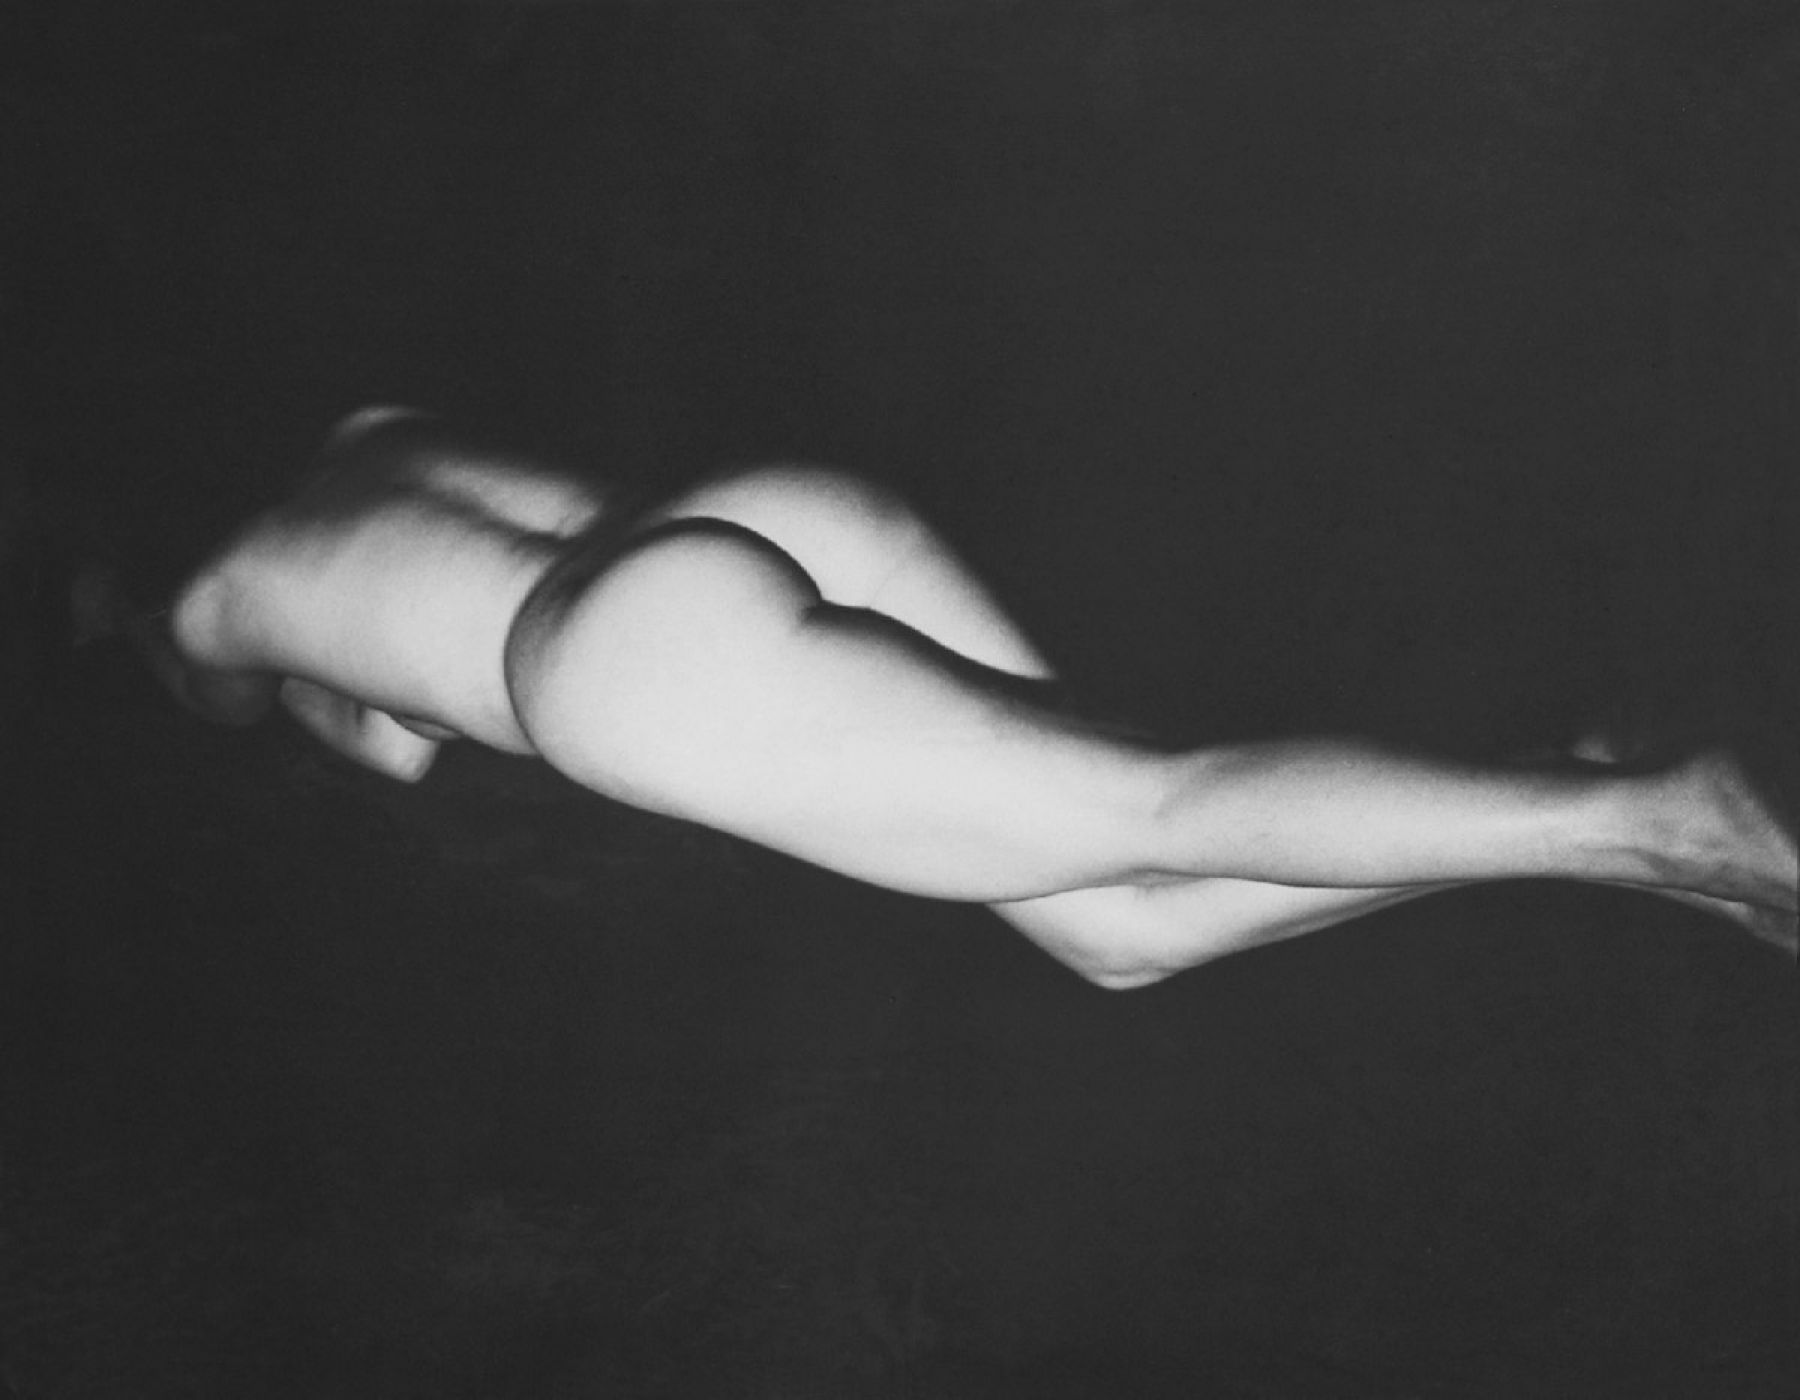 Harry Callahan, “Hot Stuff! (Eleanor nude)”, 1948